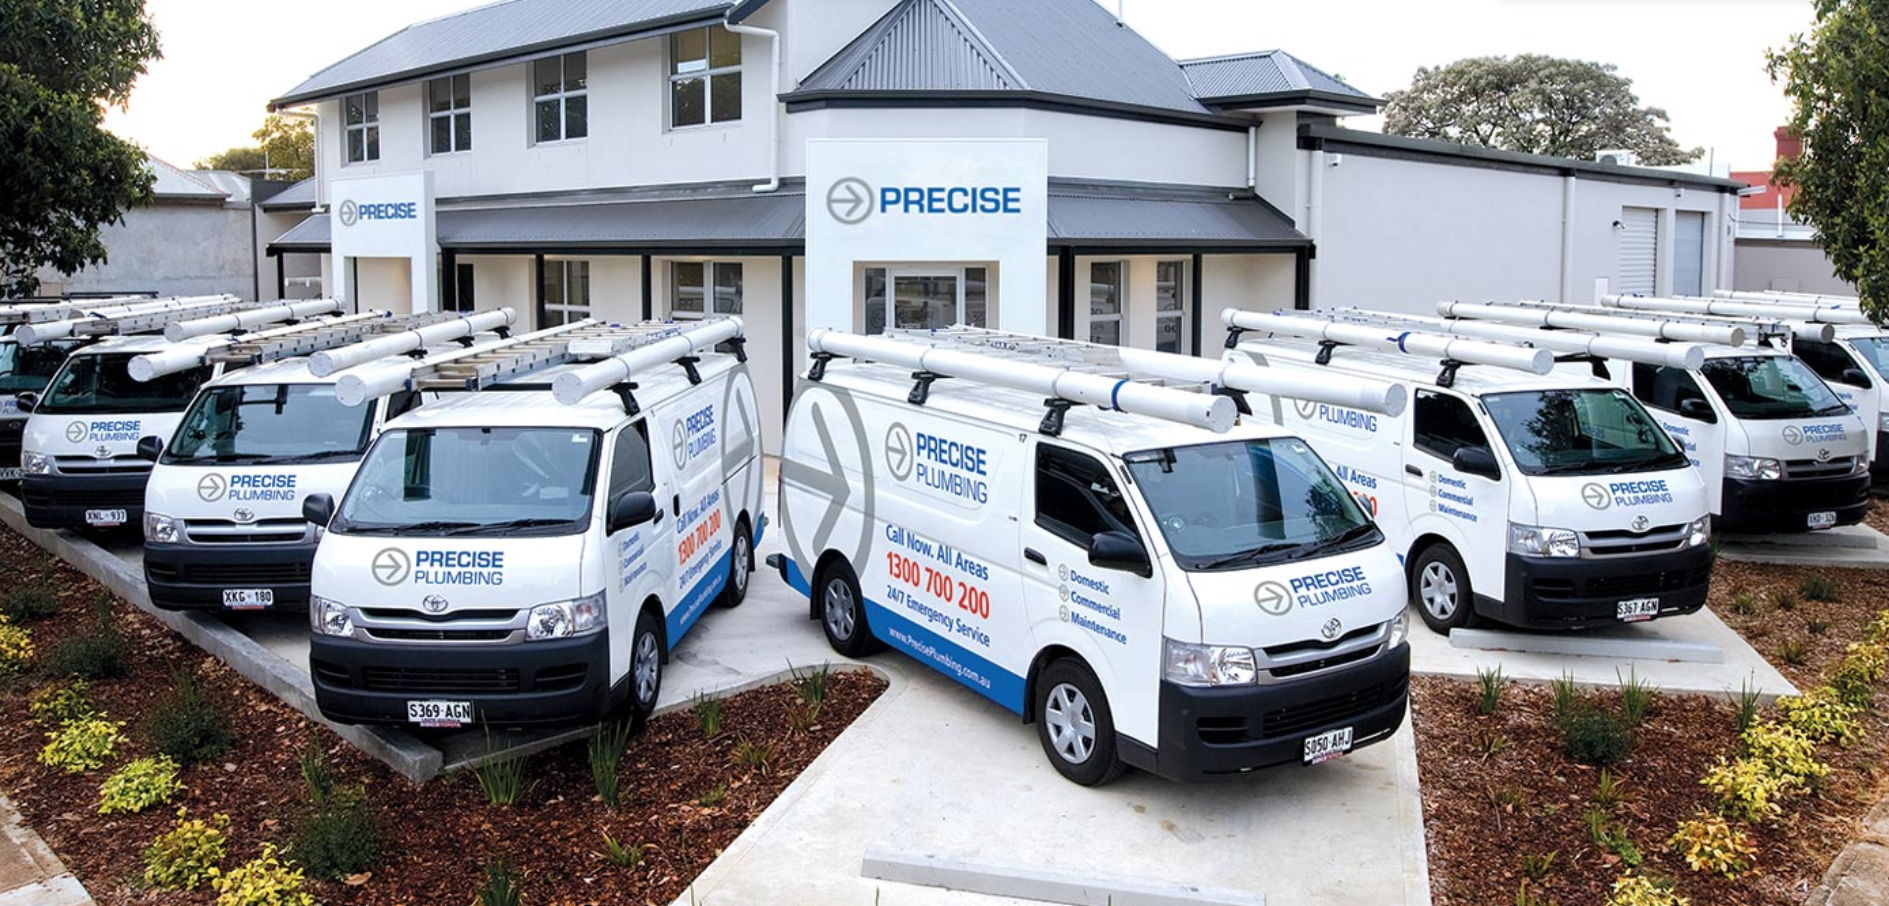 Precise Plumbing & Electrical Adelaide